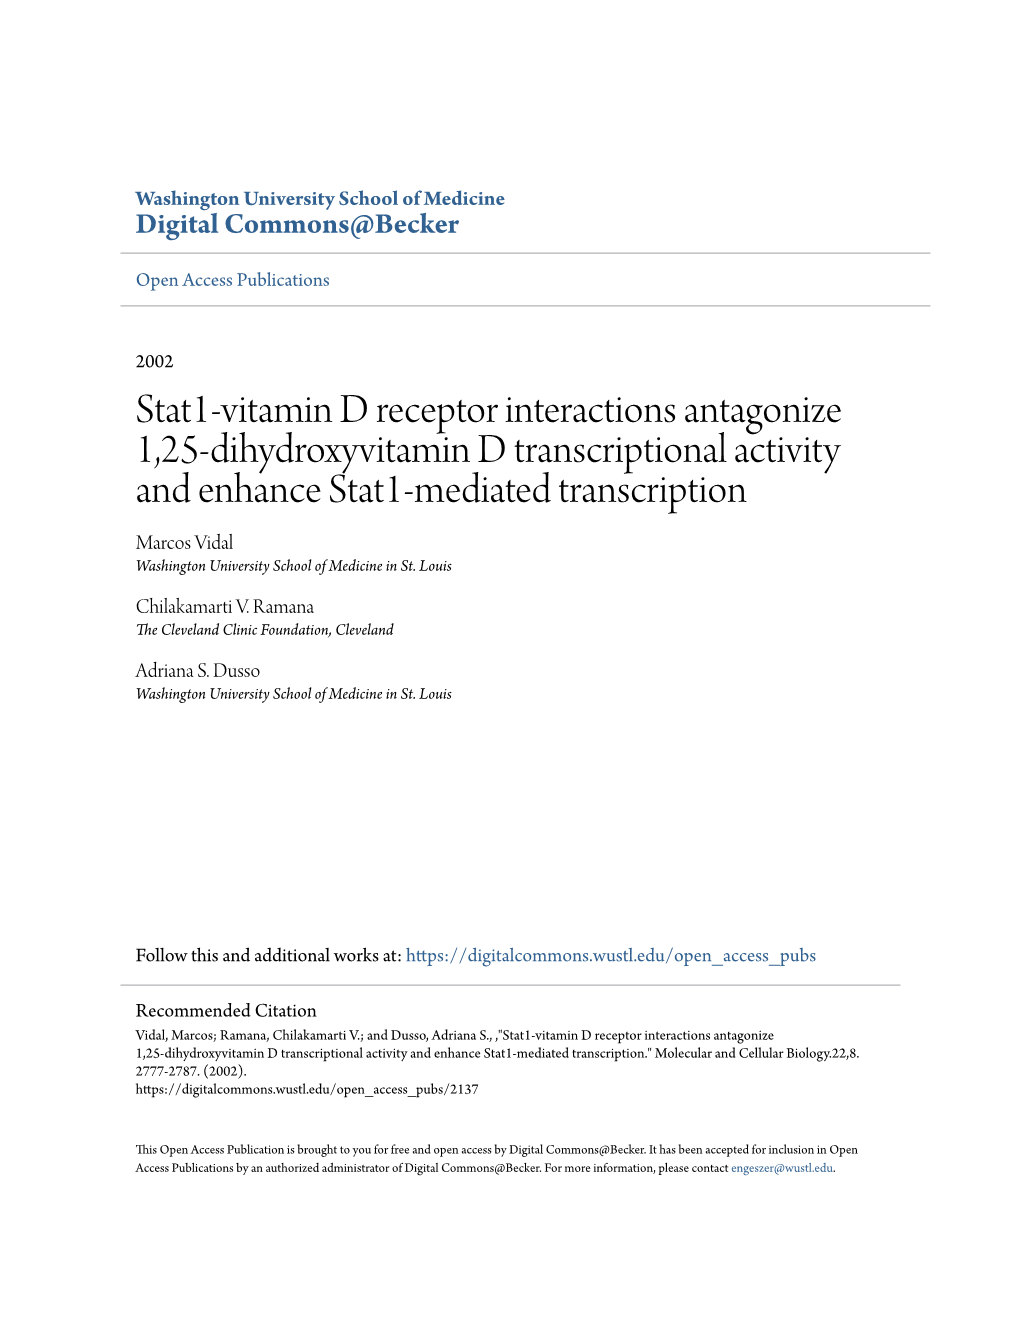 Stat1-Vitamin D Receptor Interactions Antagonize 1,25-Dihydroxyvitamin